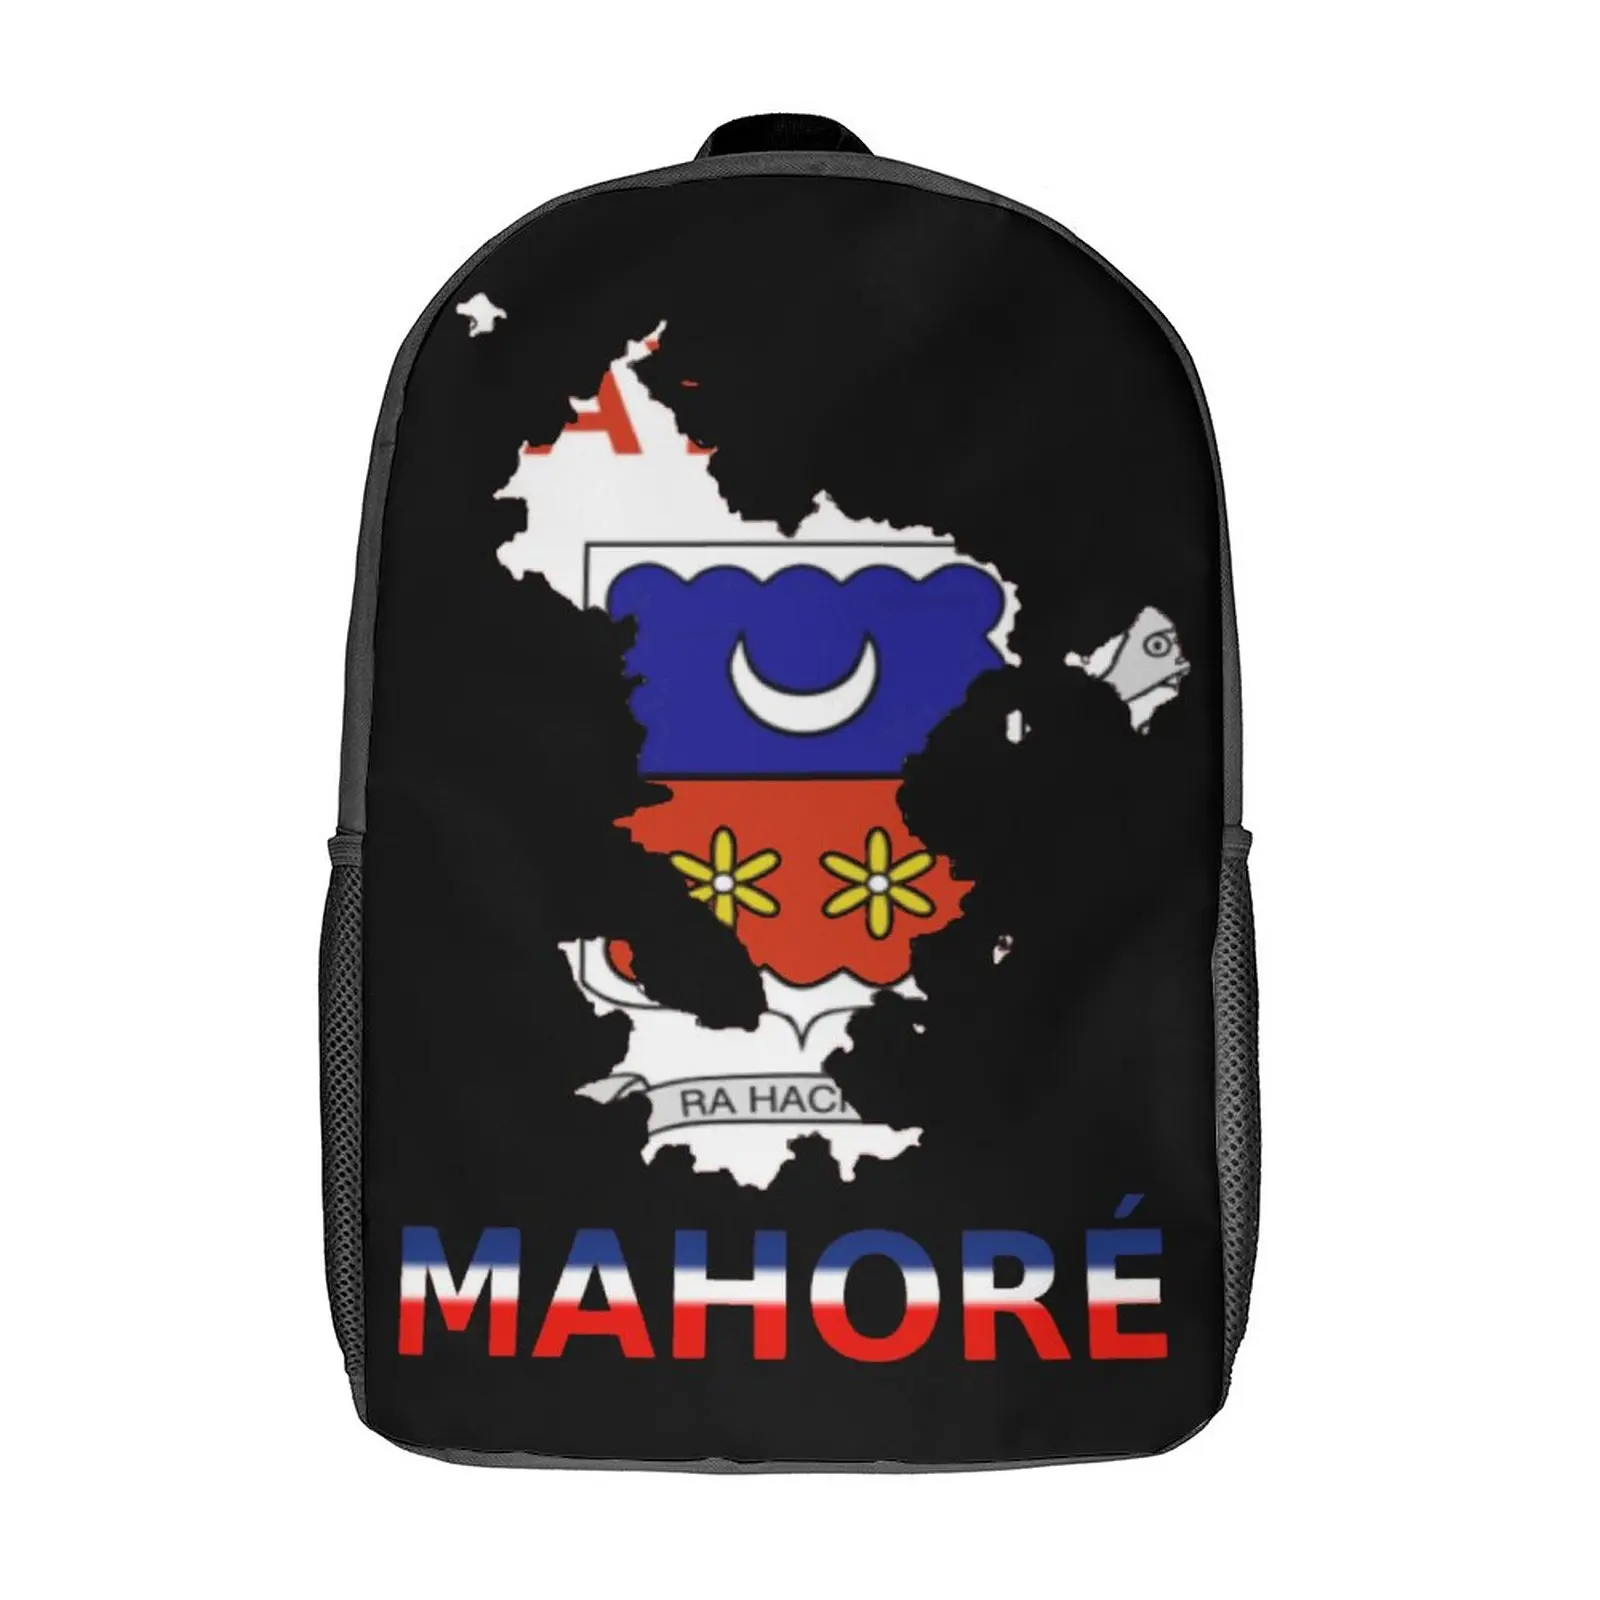 

17 Inch Shoulder Backpack Carte + Inscription De Mayotte En Mahorais Secure Unique Comfortable Schools Field Pack